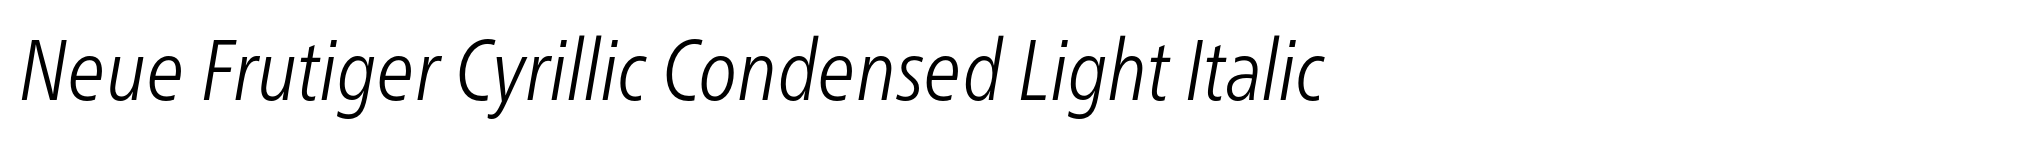 Neue Frutiger Cyrillic Condensed Light Italic image